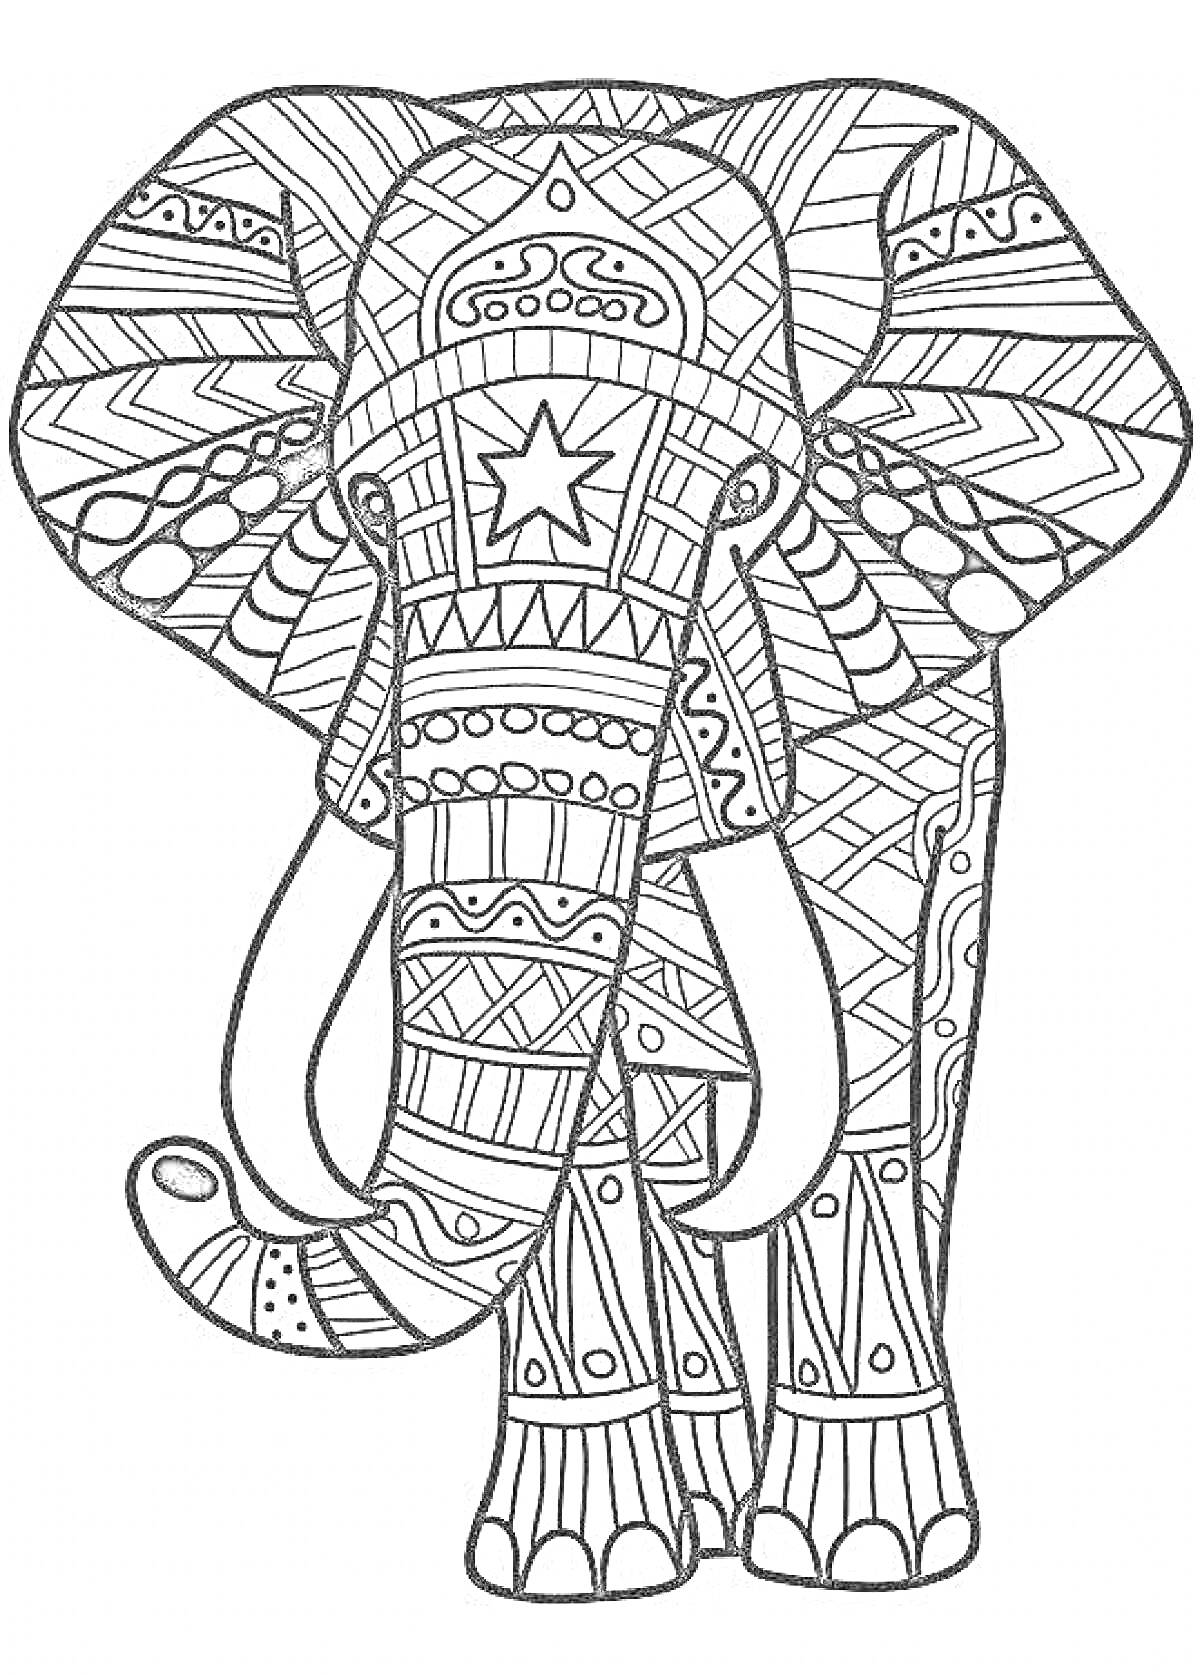 Раскраска Слон антистресс с узорами и звездами